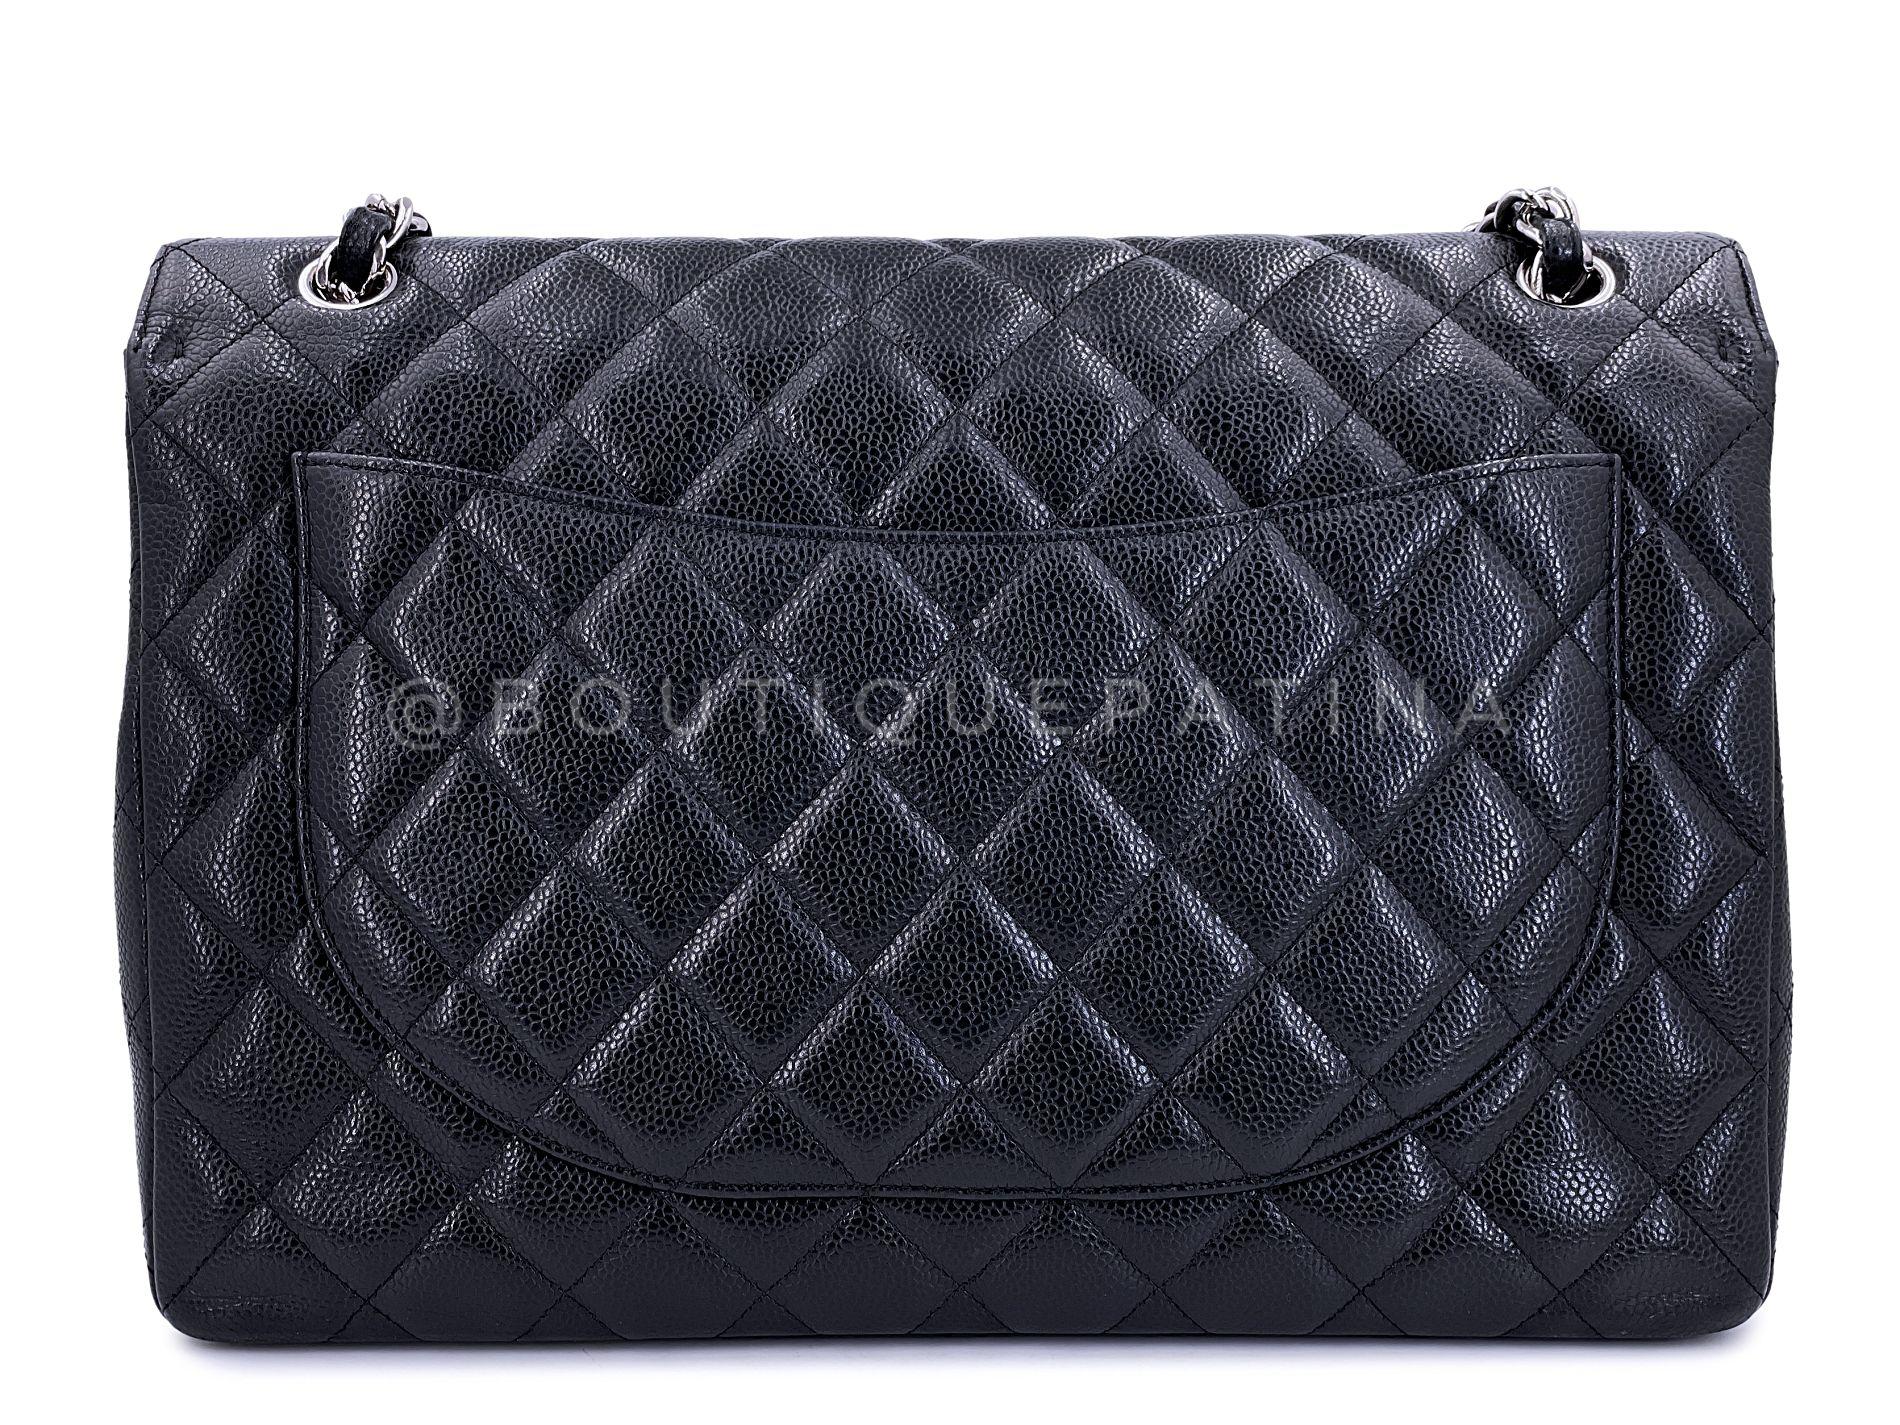 Chanel Black Caviar Maxi Flap Bag SHW Single 66714 For Sale 1